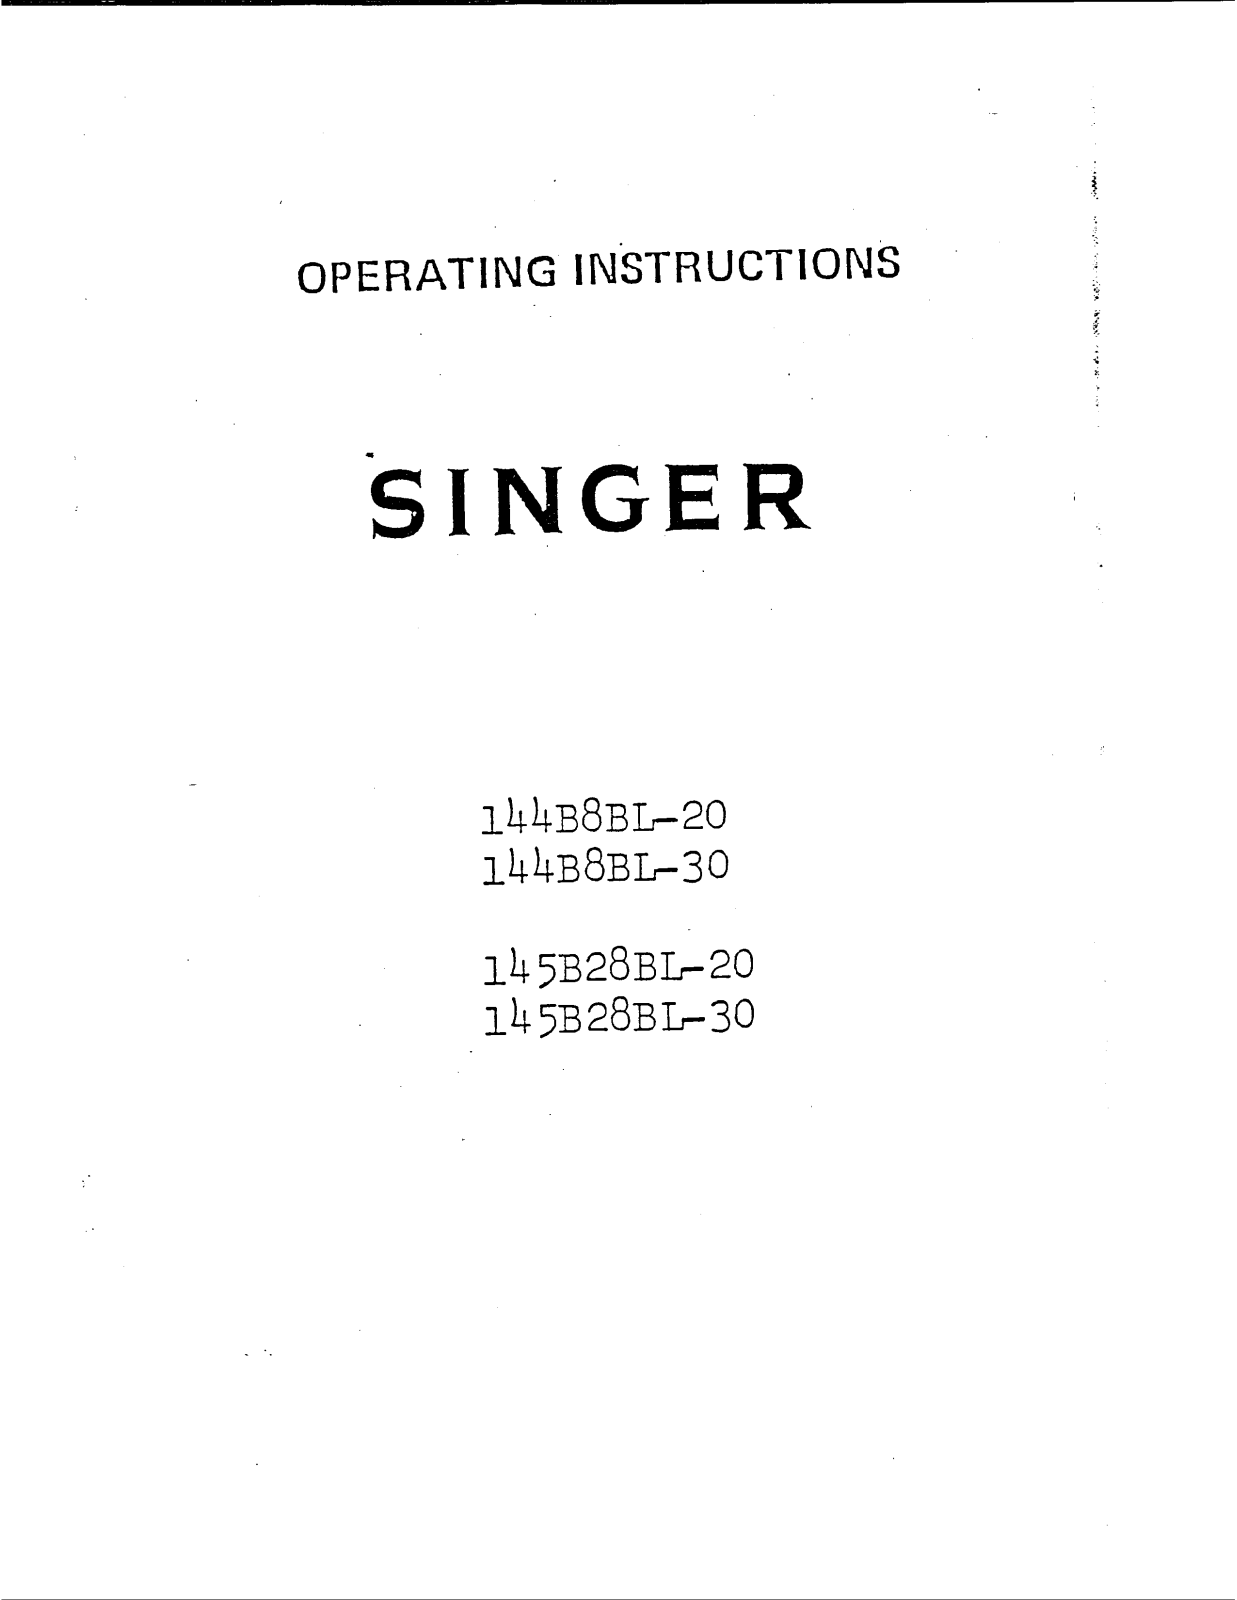 Singer 145B28BL30, 145B28BL20, 144B8BL30, 144B8BL20 Operating instructions